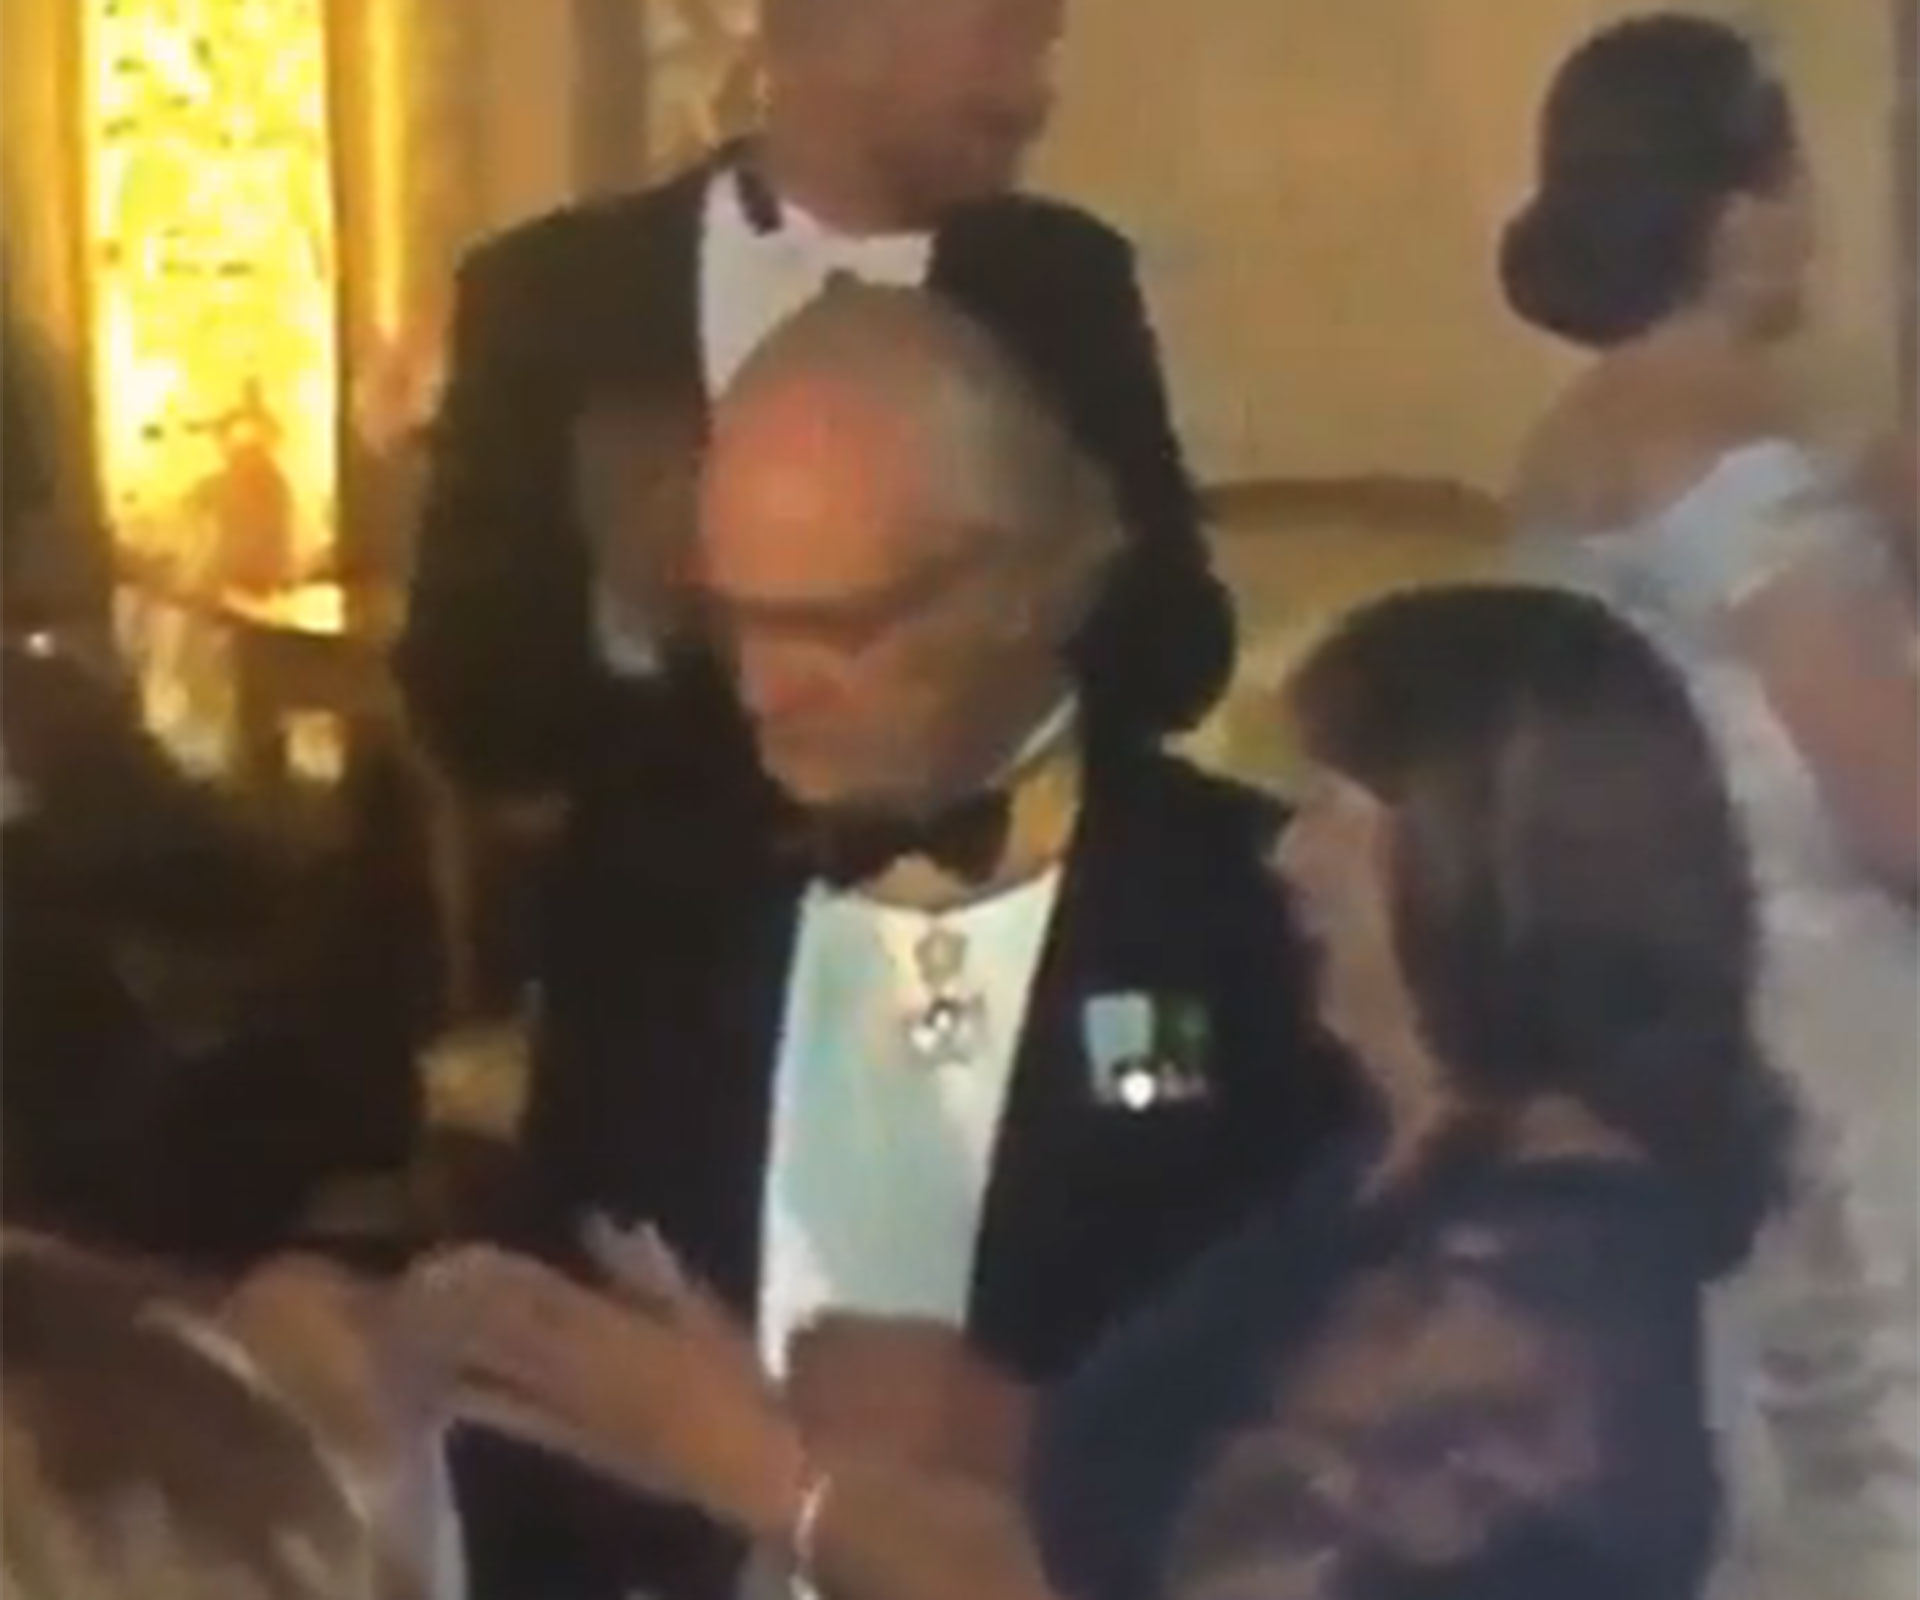 King caught dad dancing at royal wedding